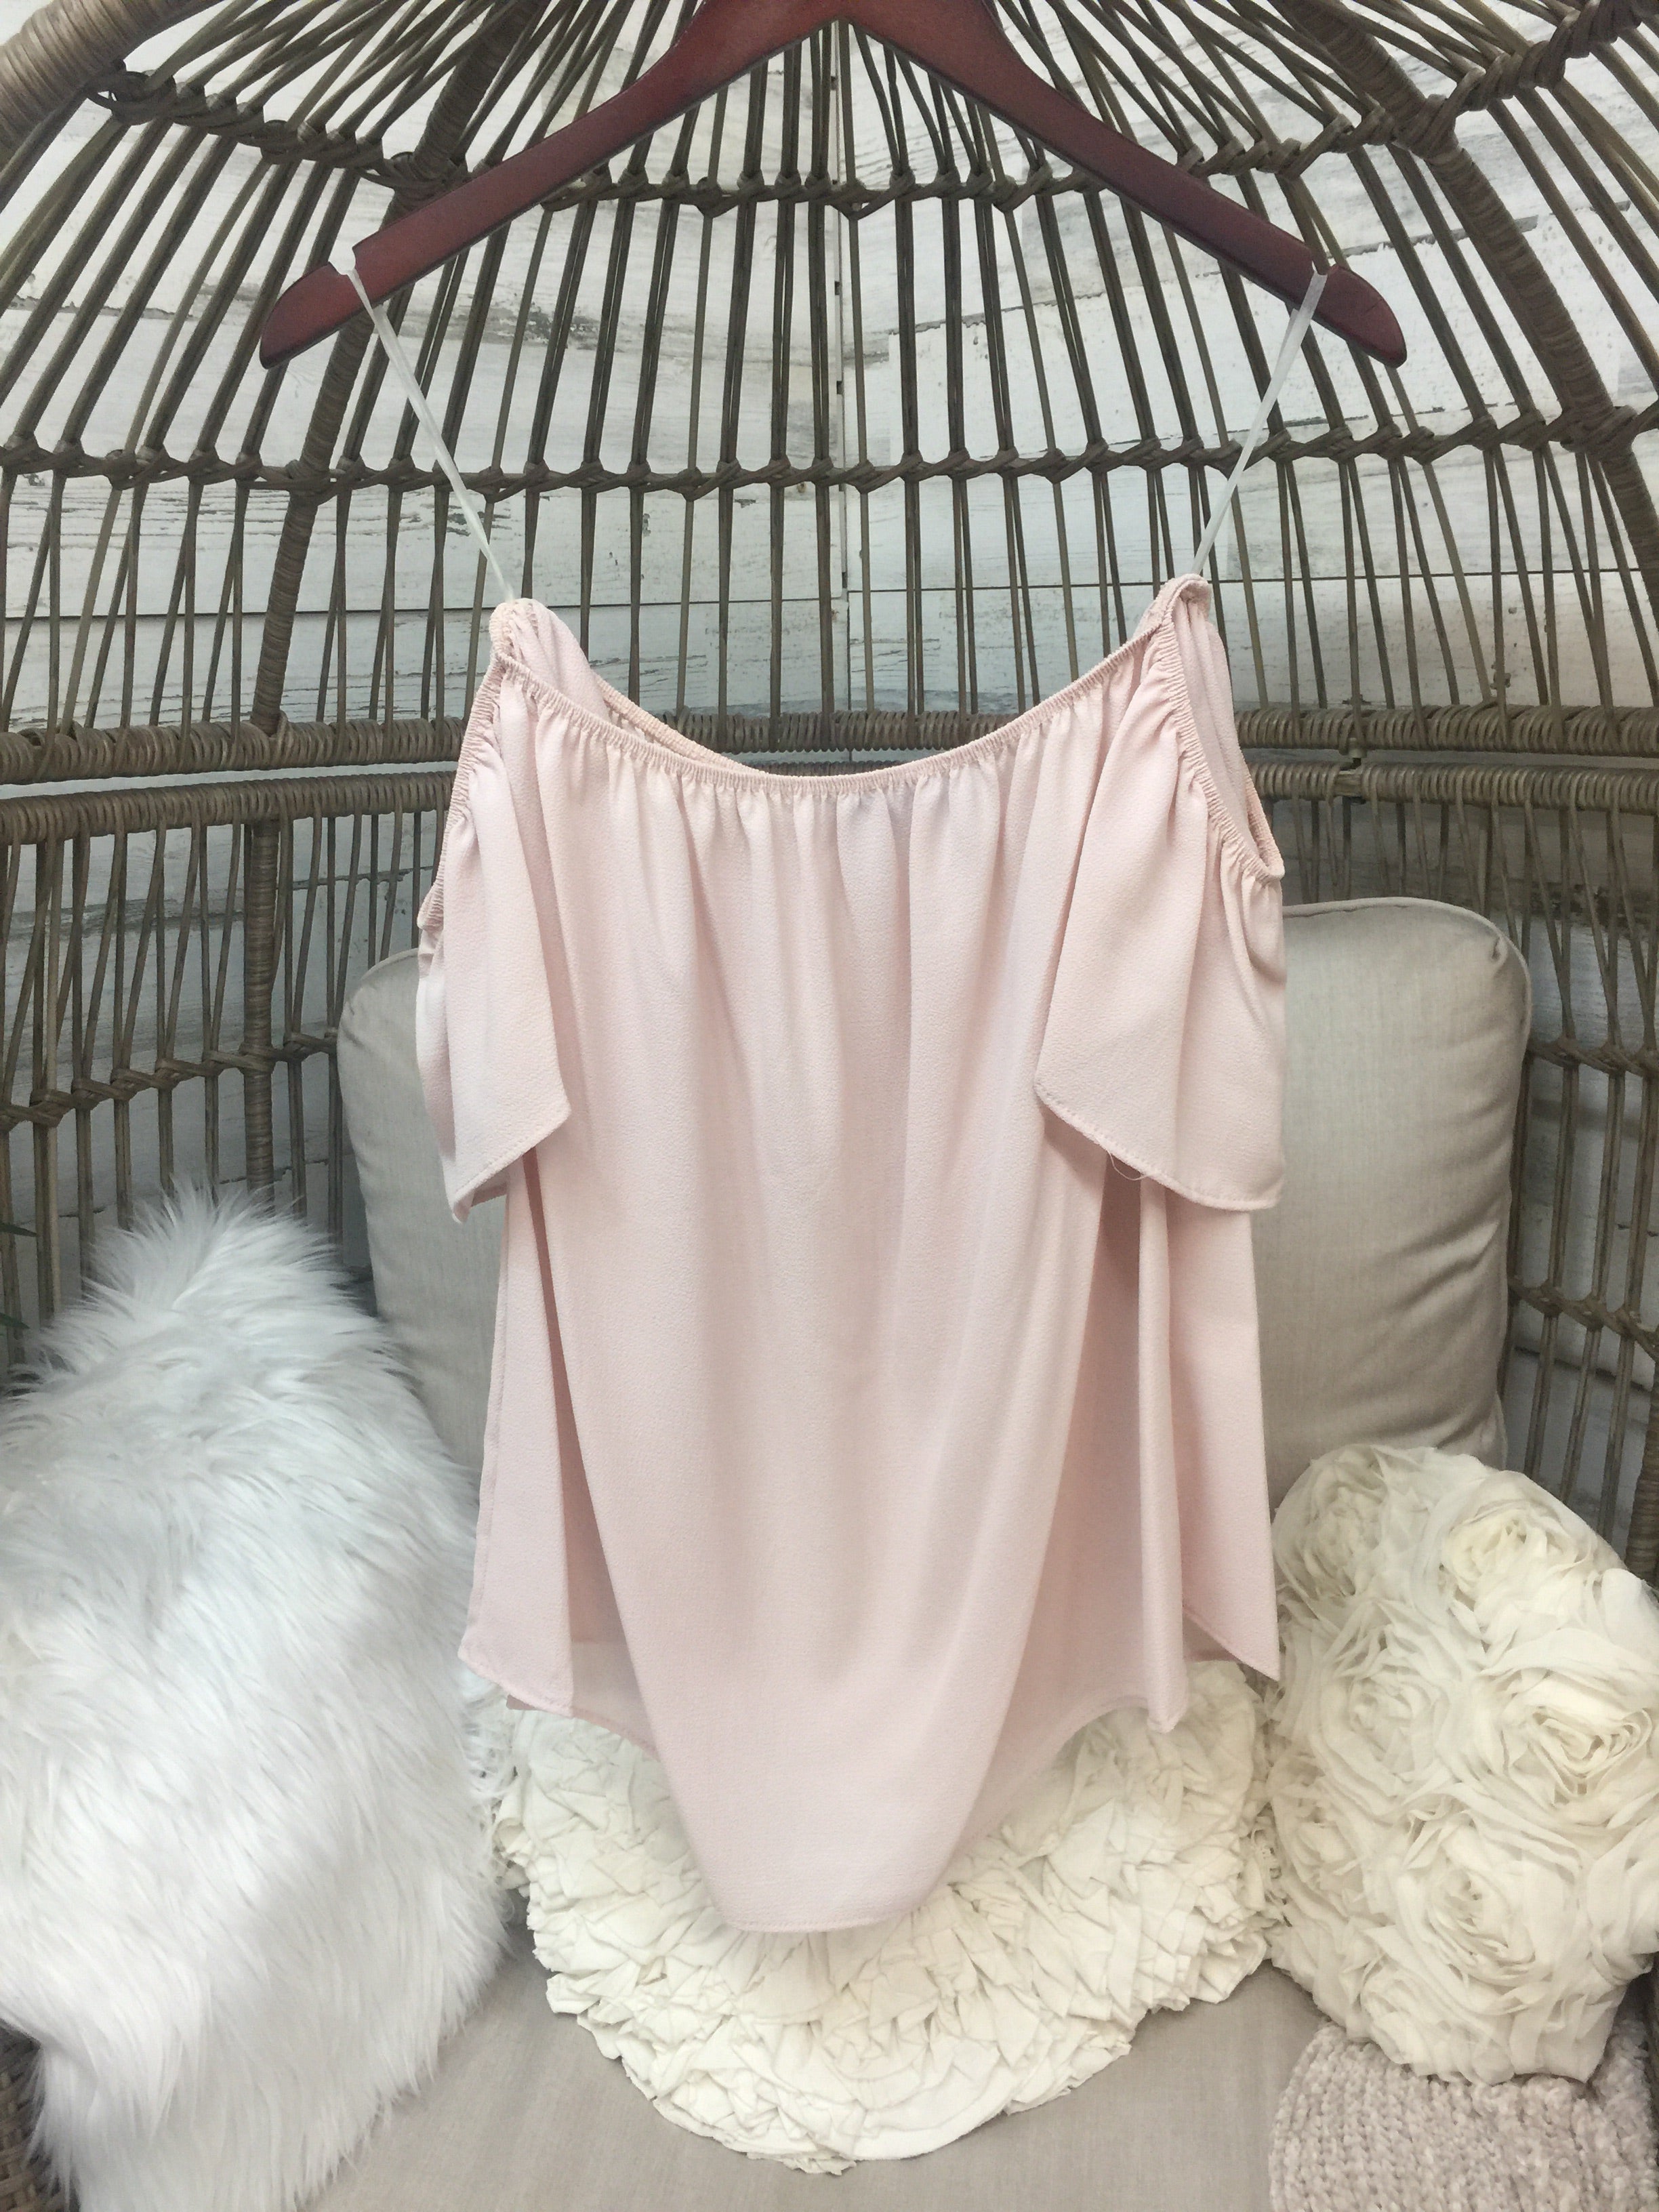 Blush Pink Off The Shoulder Top - Giddy Up Glamour Boutique